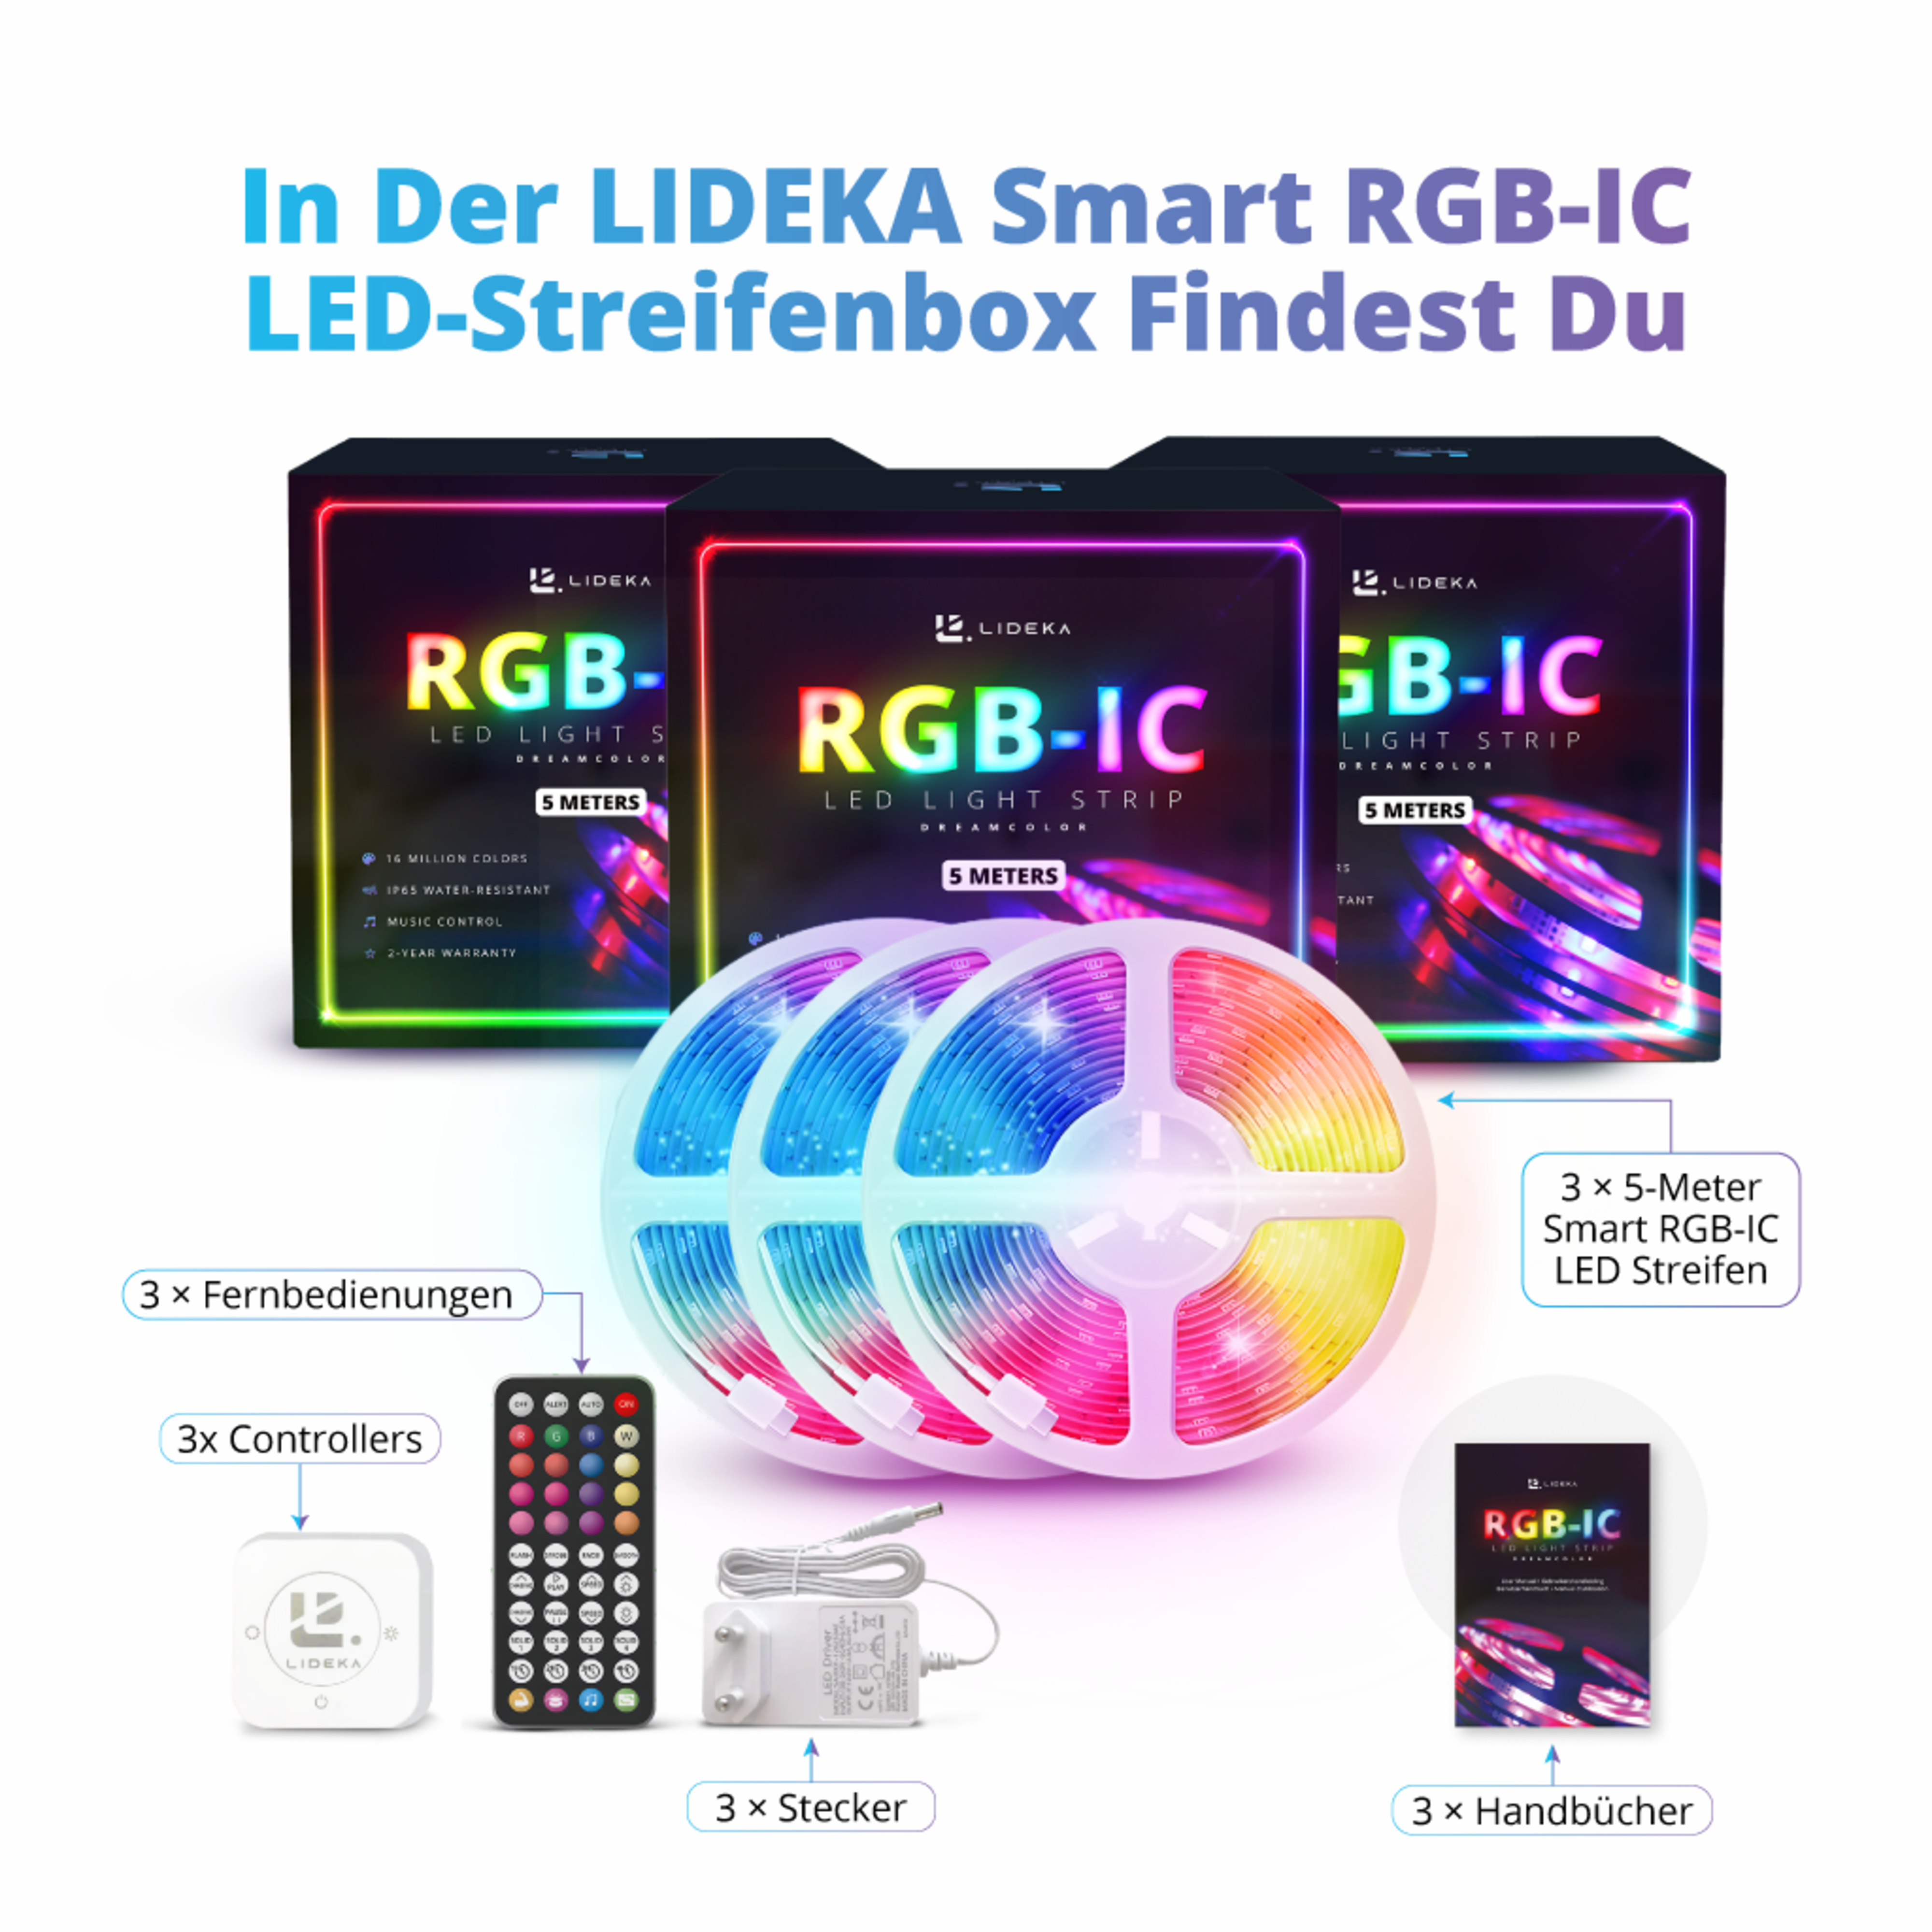 LIDEKA LED-Streifen 15m RGBIC LED strips Regenbogen Multicolors